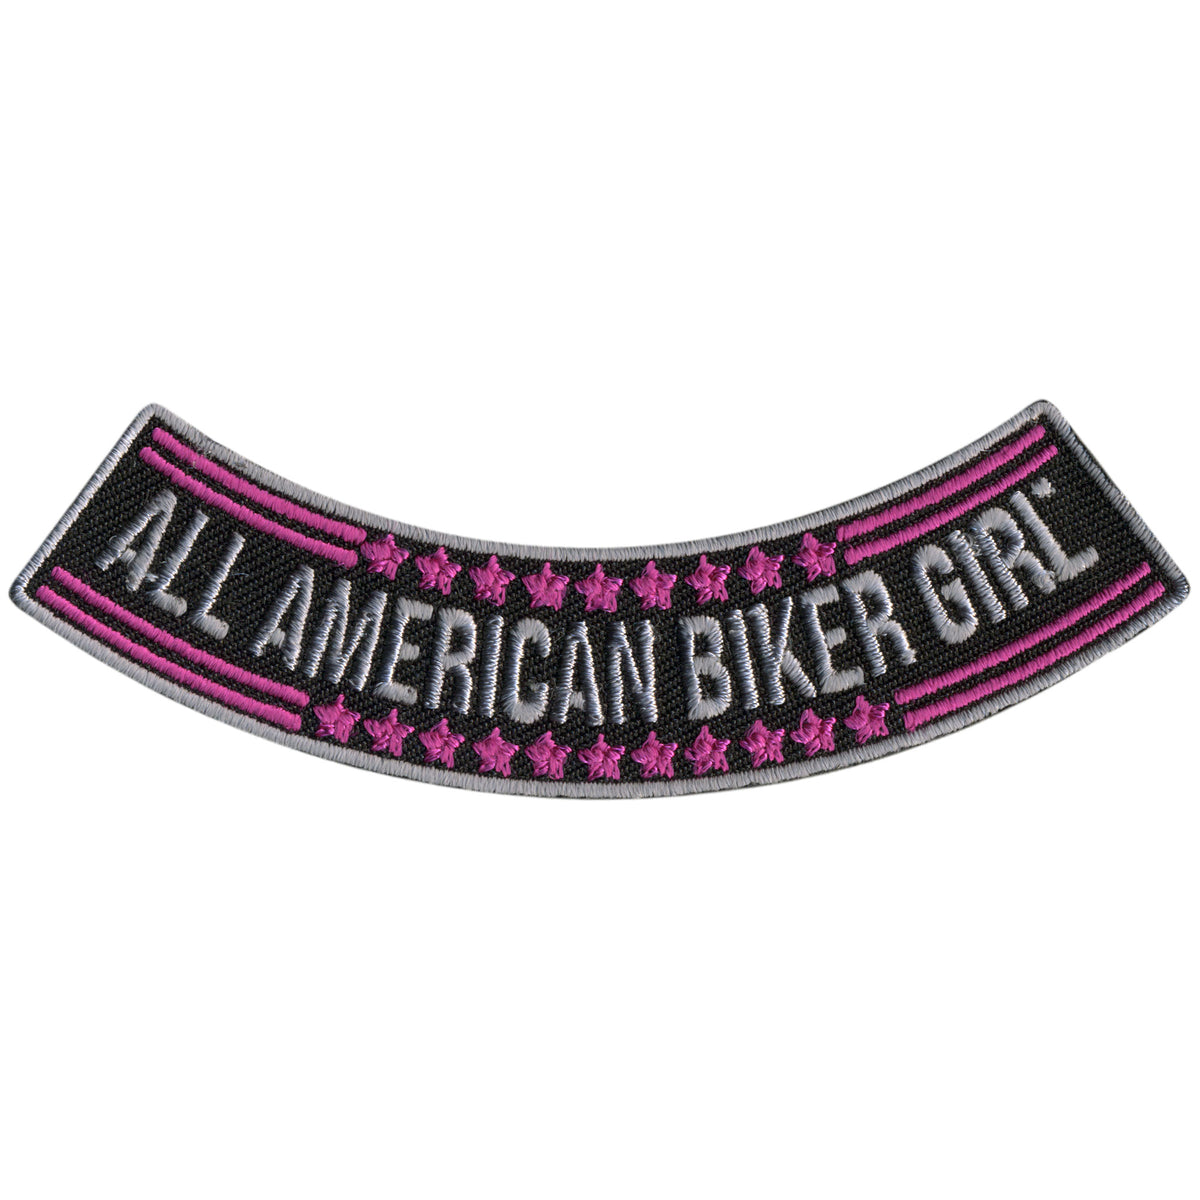 Hot Leathers All American Biker Girl 4” X 1” Bottom Rocker Patch